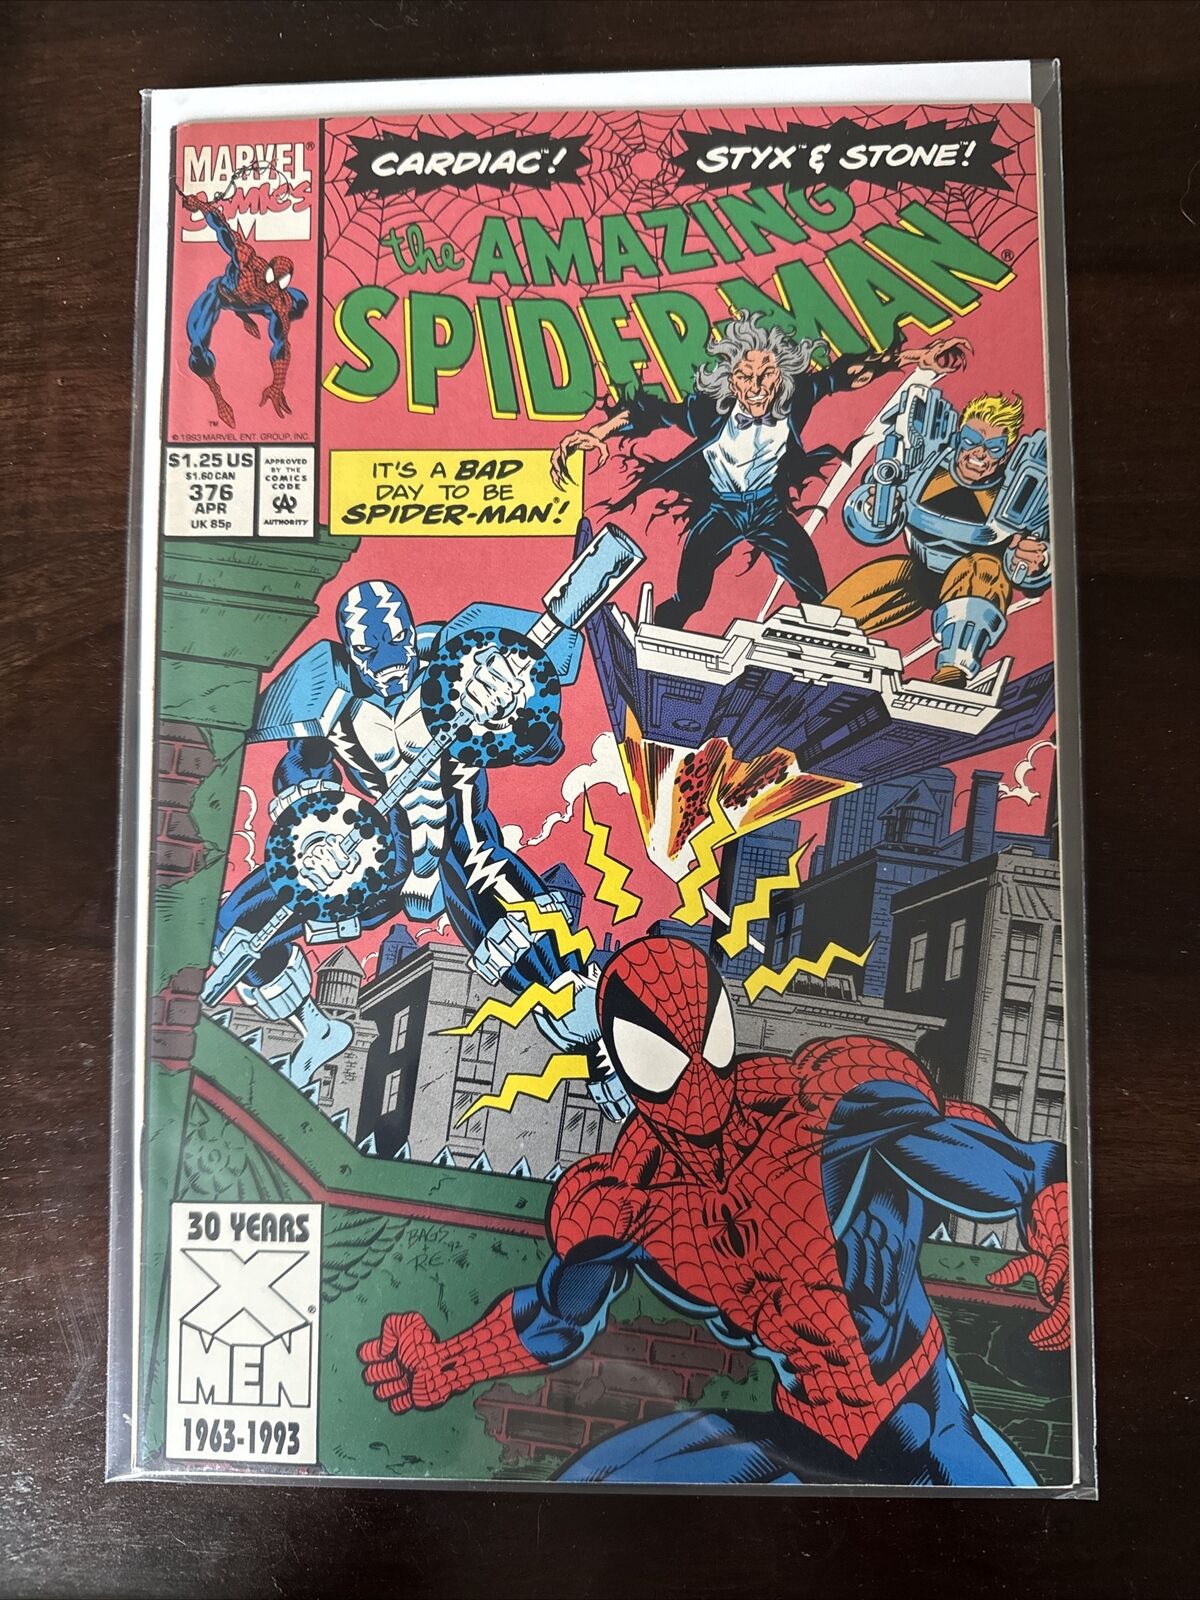 The Amazing Spider-Man #376 (Marvel Comics April 1993)